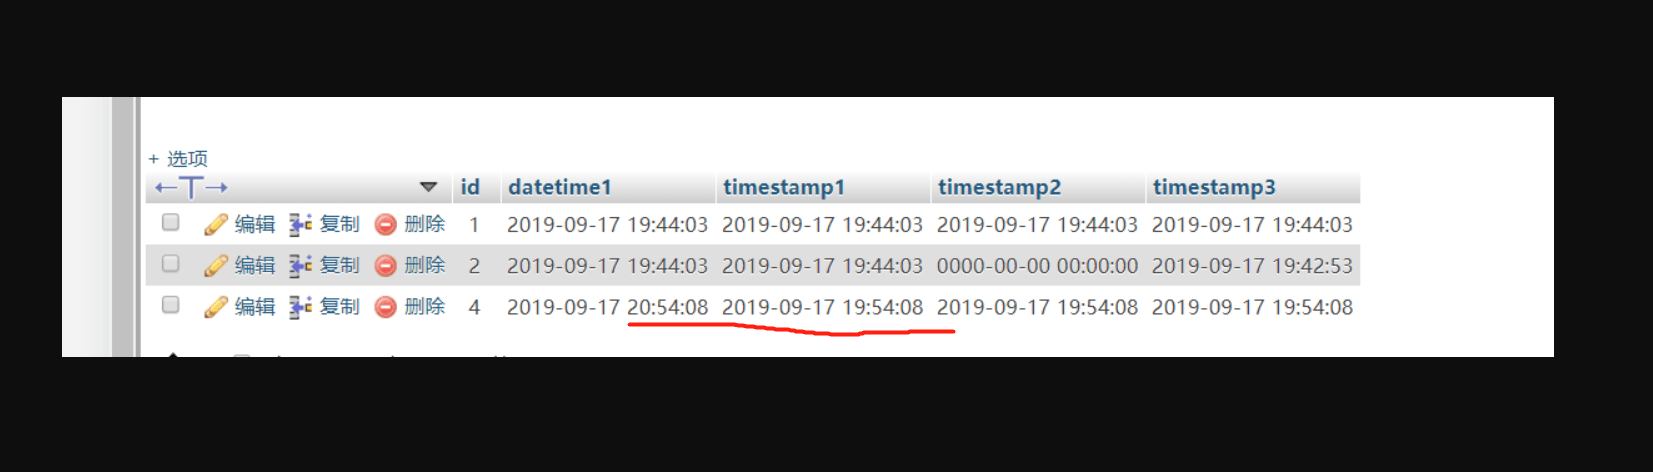 MySQL 的 timestamp 和 datetime 类型比较